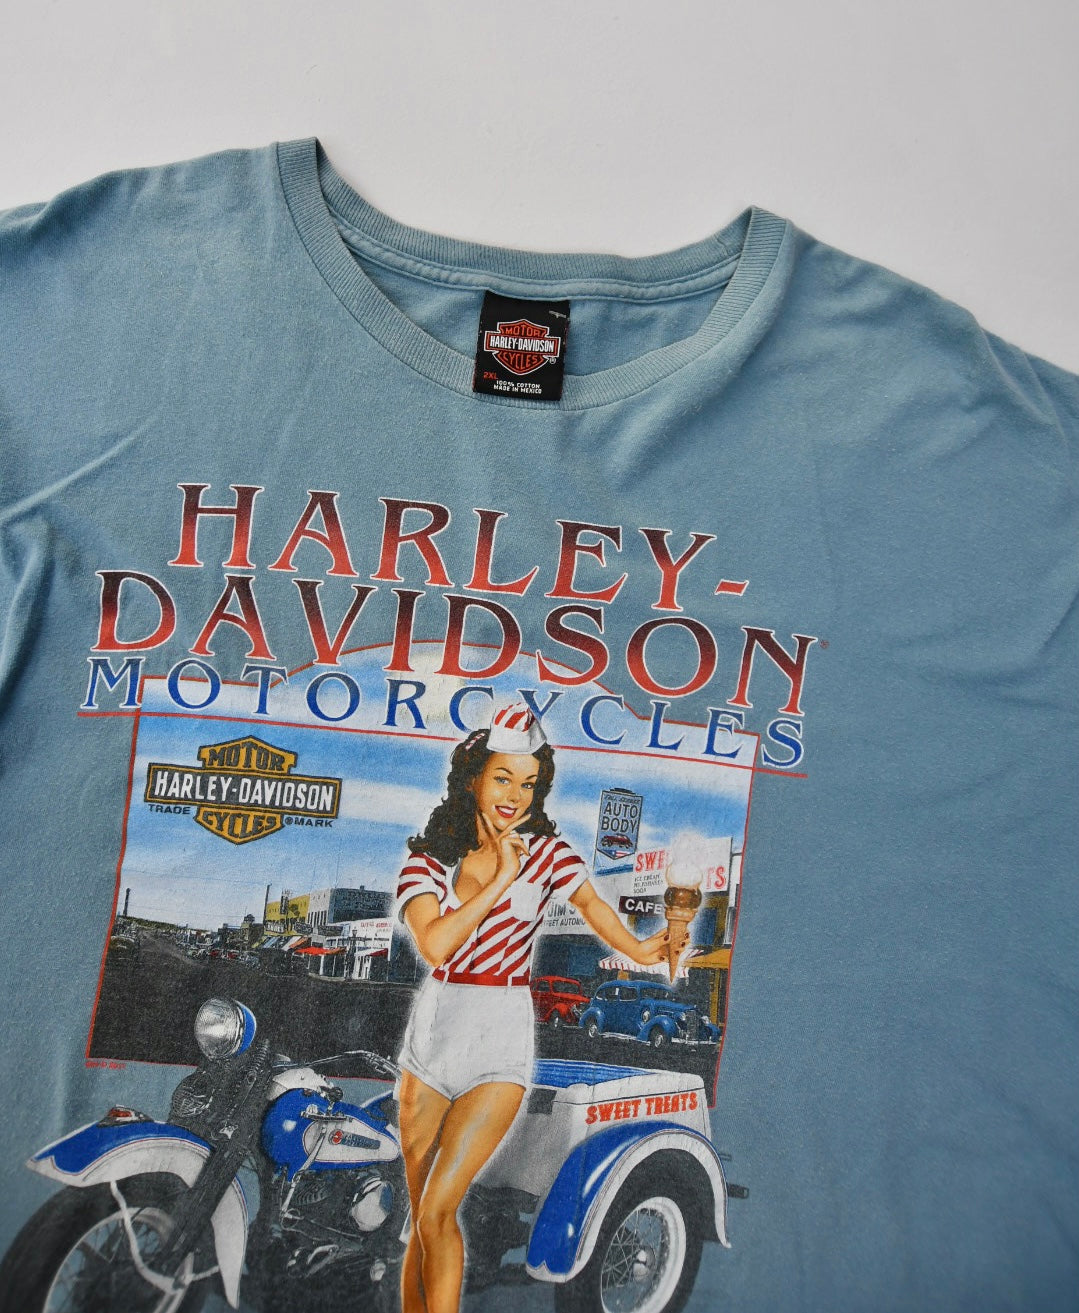 Secondhand Harley Davidson St. Kitts T-Shirt